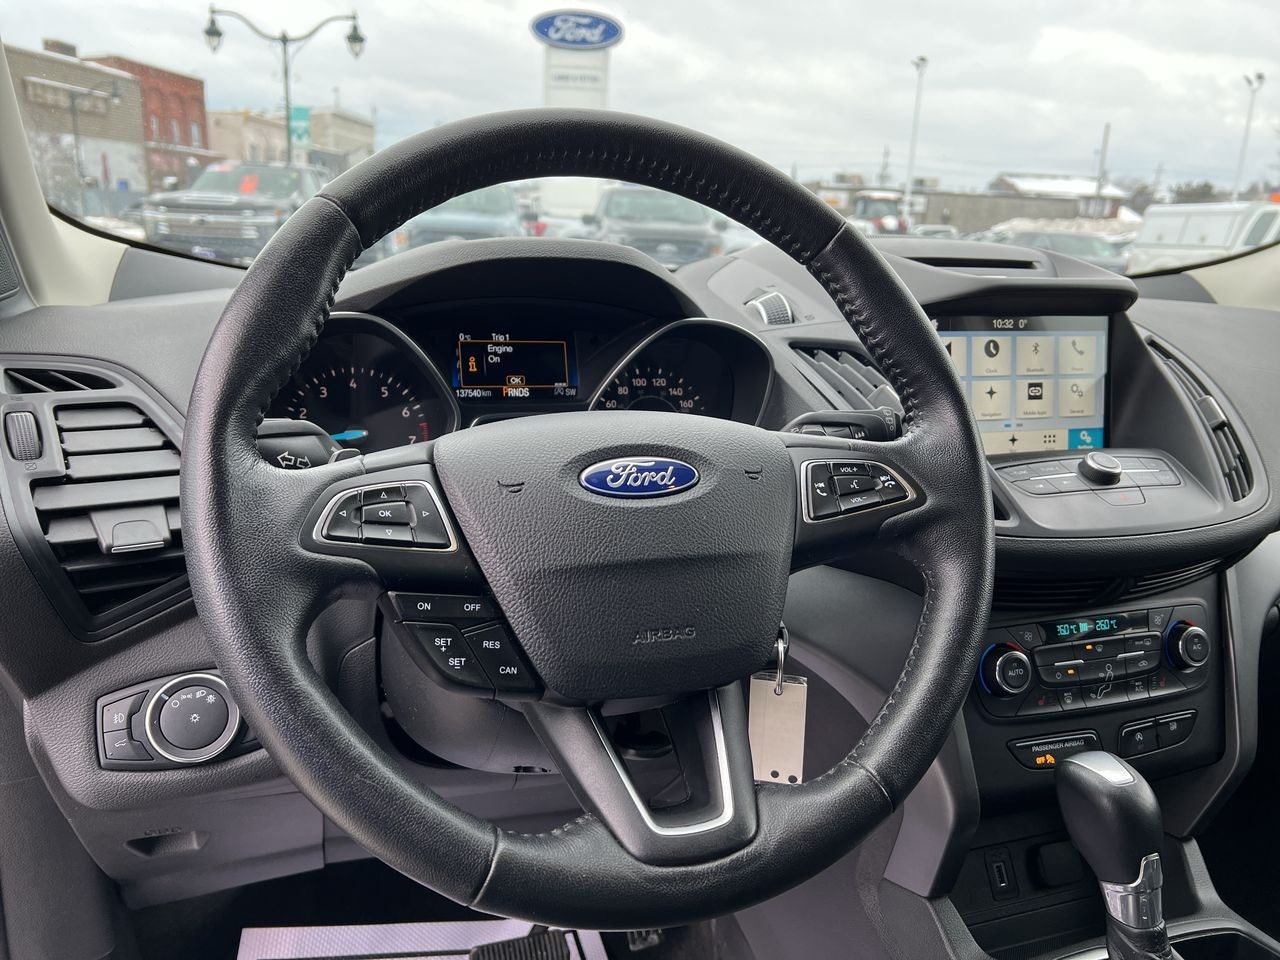 2017 Ford Escape - 20781A Full Image 14